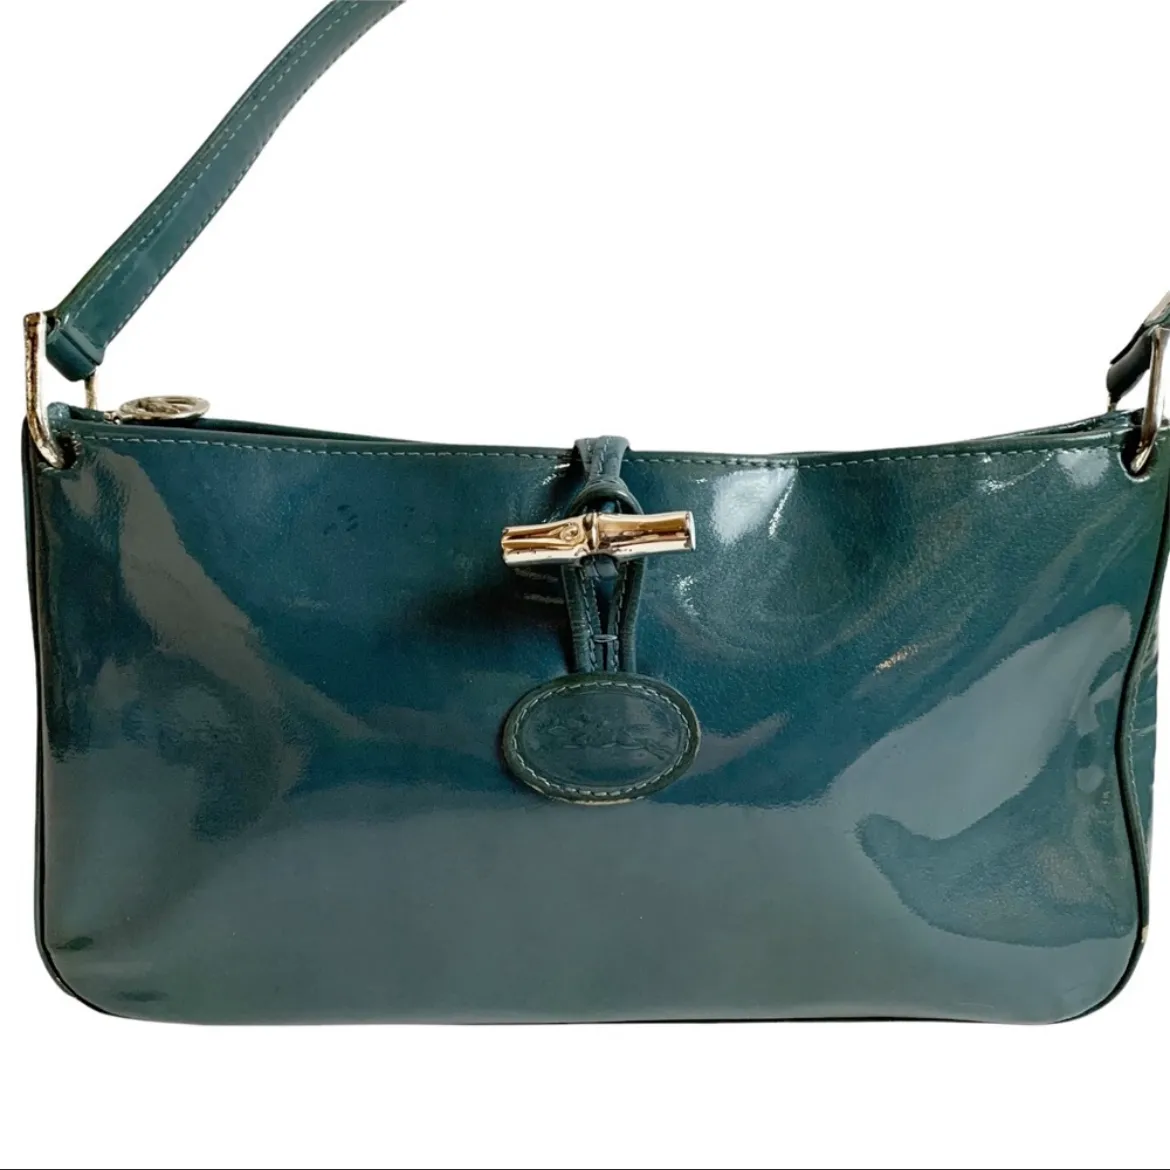 Longchamp Teal Leather Bag - Vintage photo 3